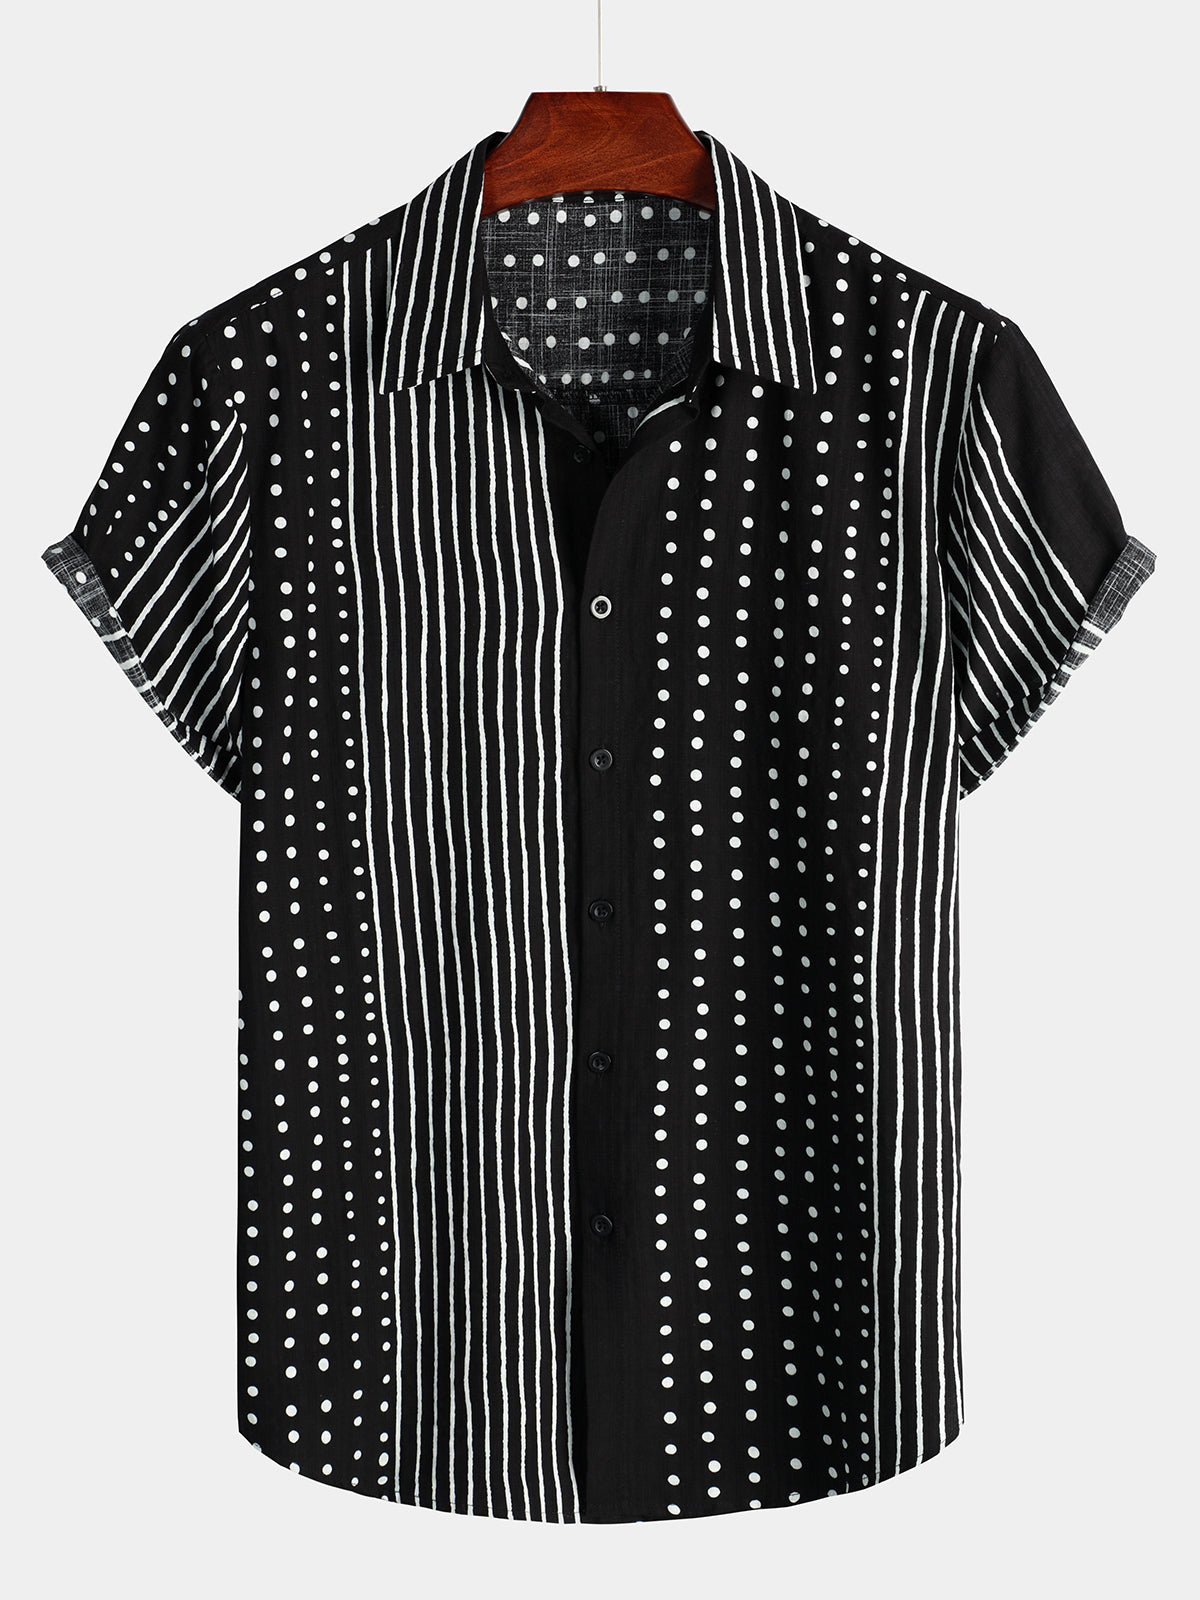 Men's Retro Black Striped and Polka Dot Button Up Short Sleeve Shirt ...